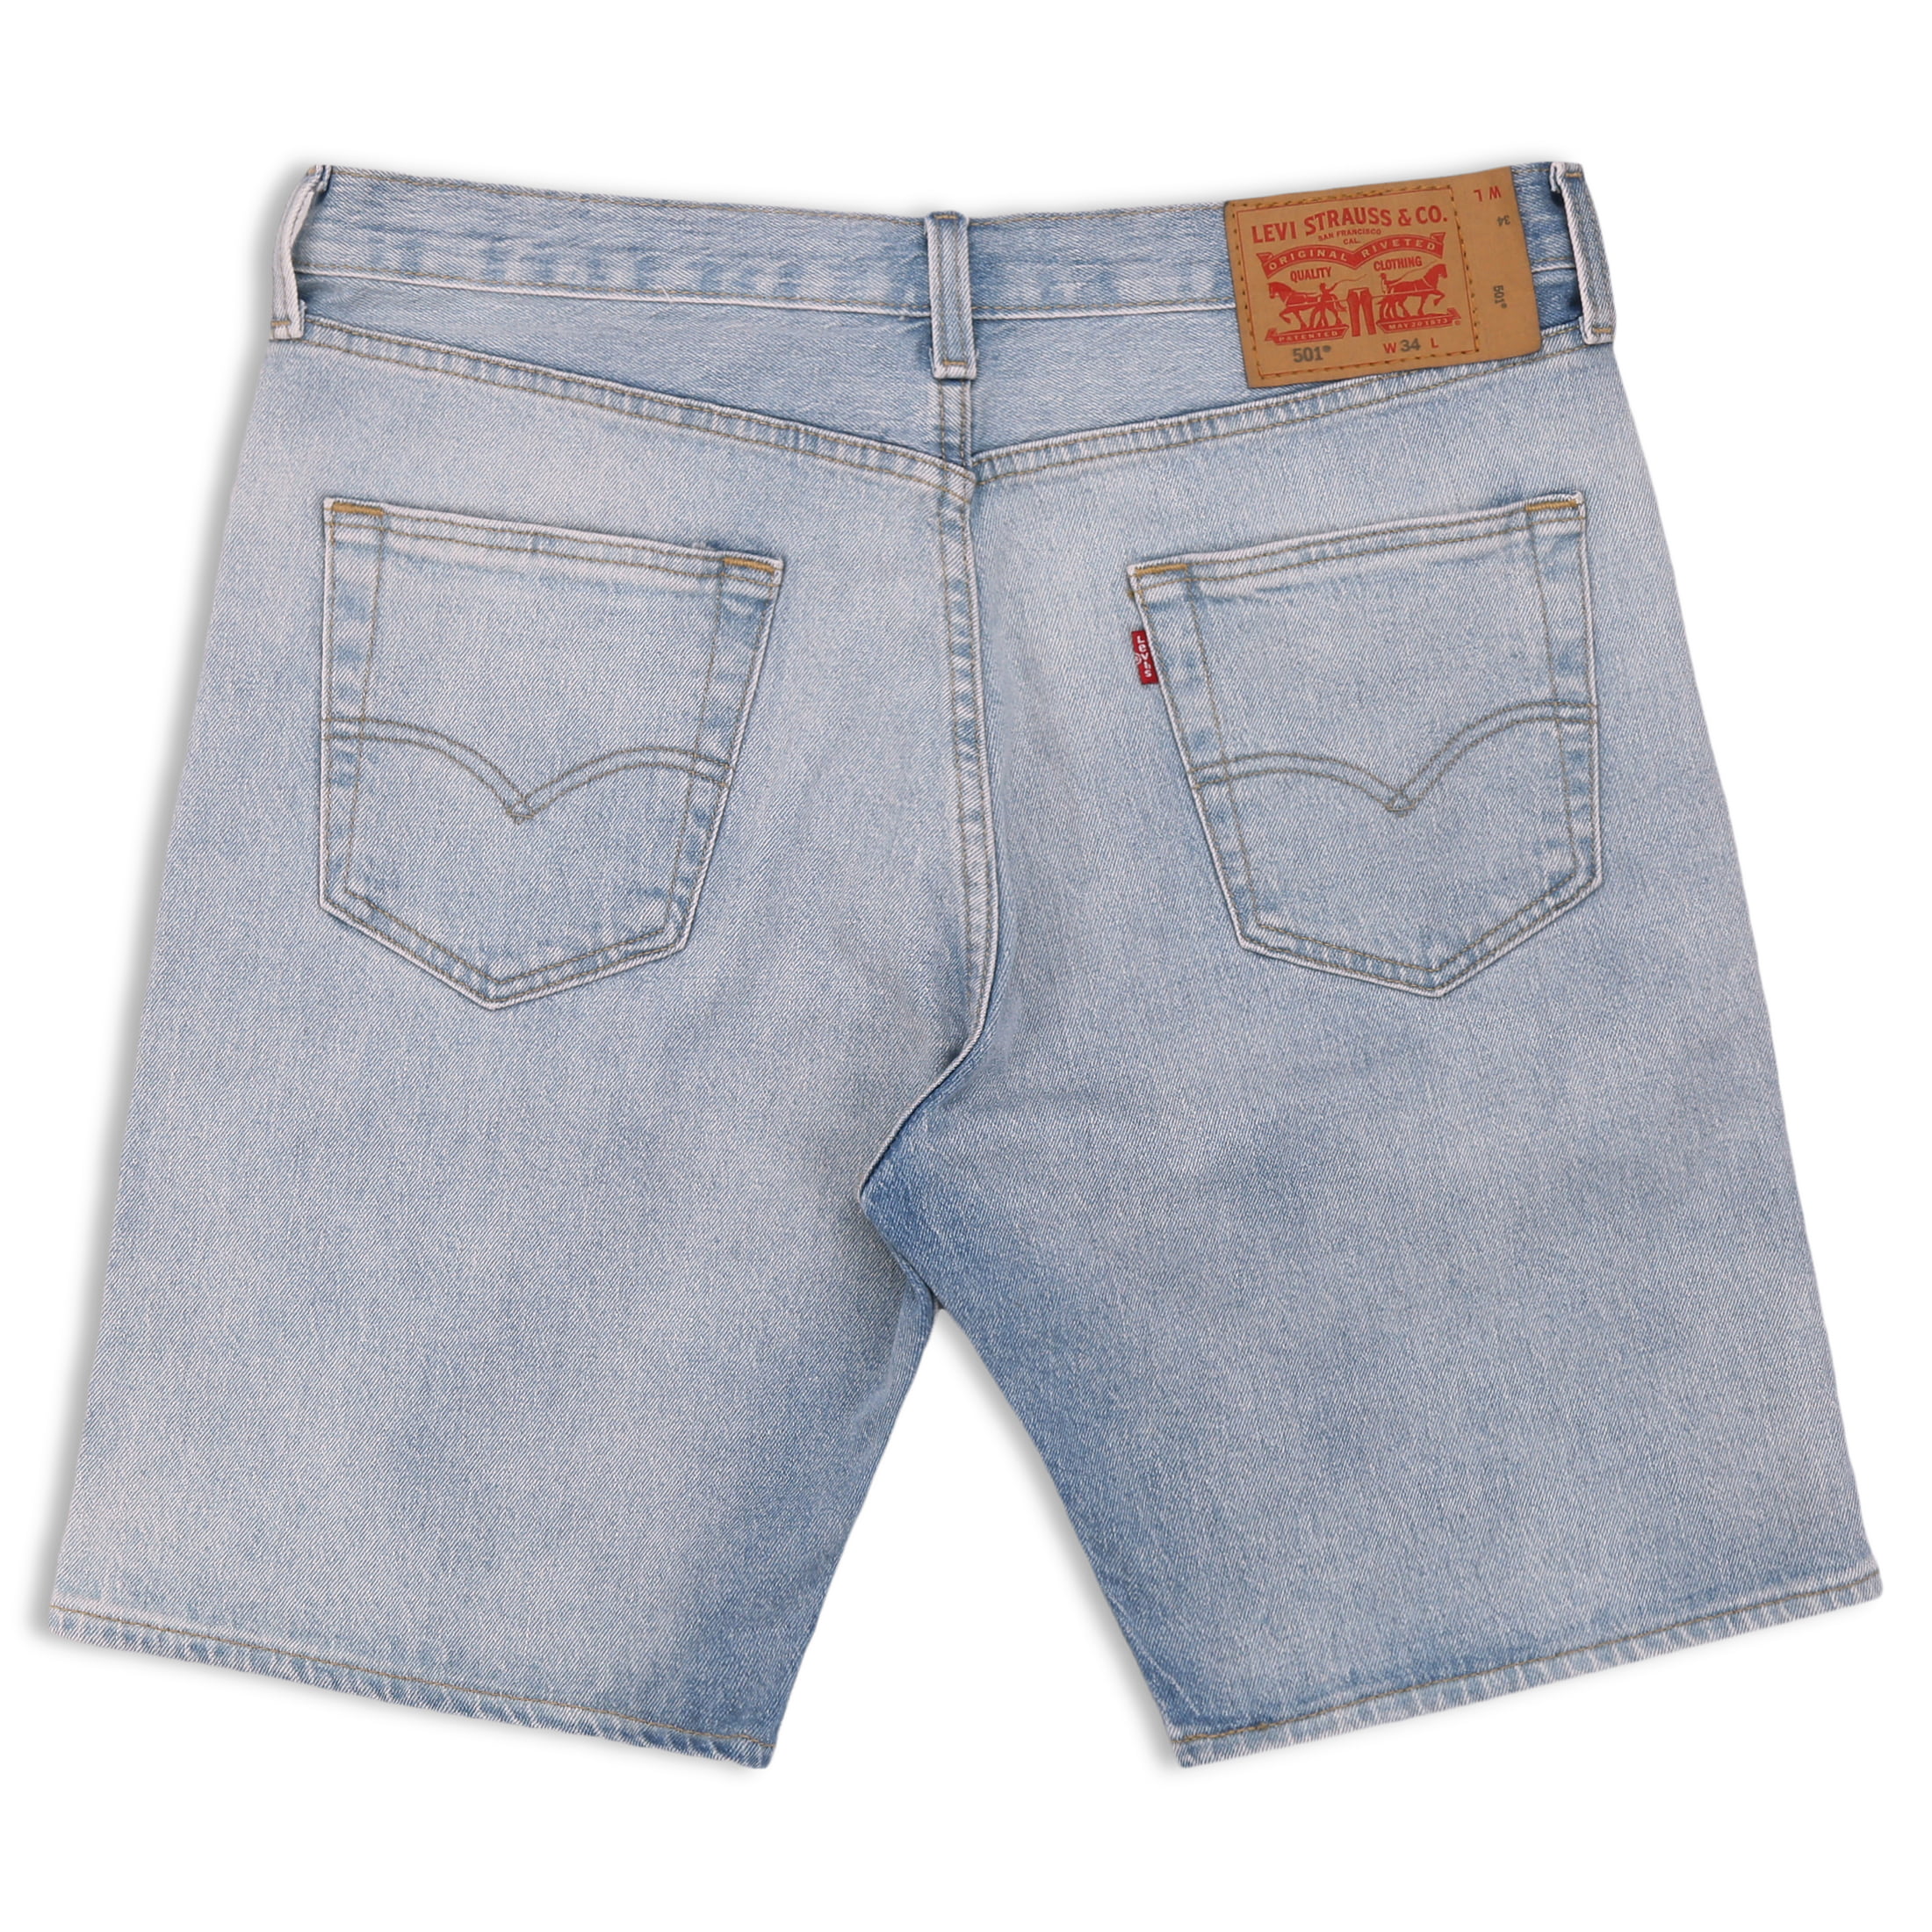 Levi's Men's 501 Original Hemmed Jean Shorts 